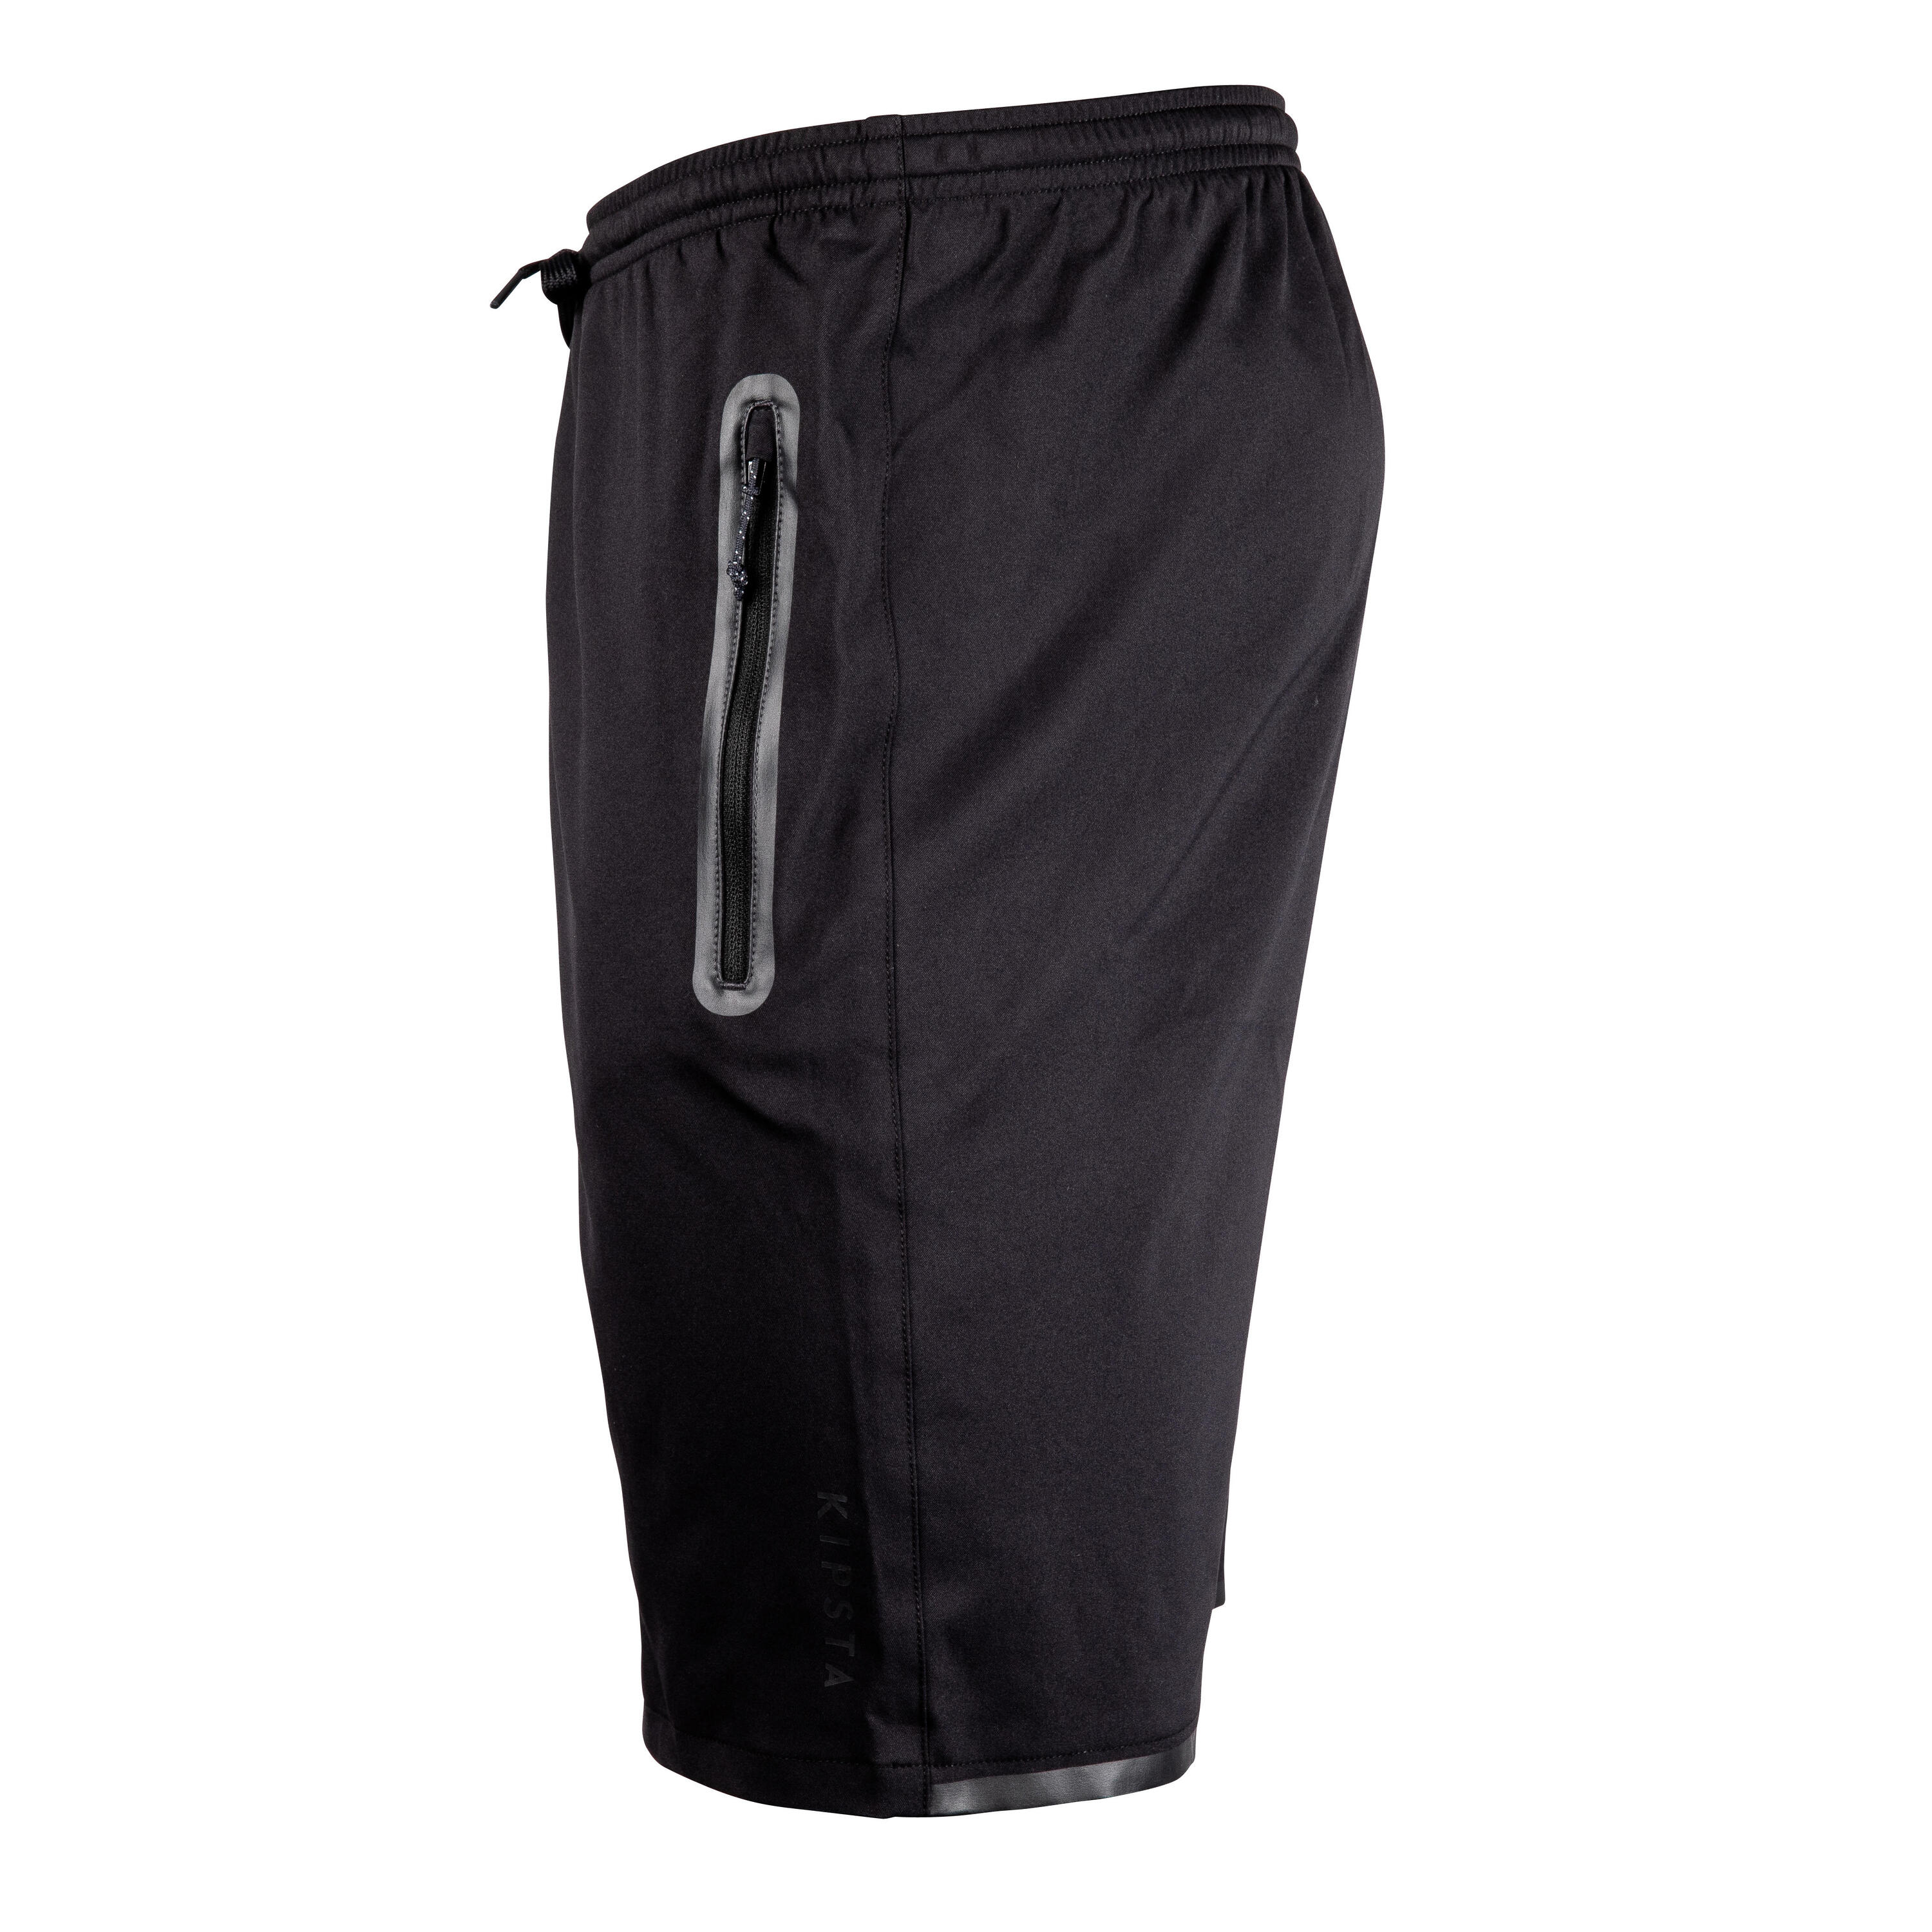 Adult Football Shorts with Zip Pockets Viralto Zip - Black/Grey 5/7